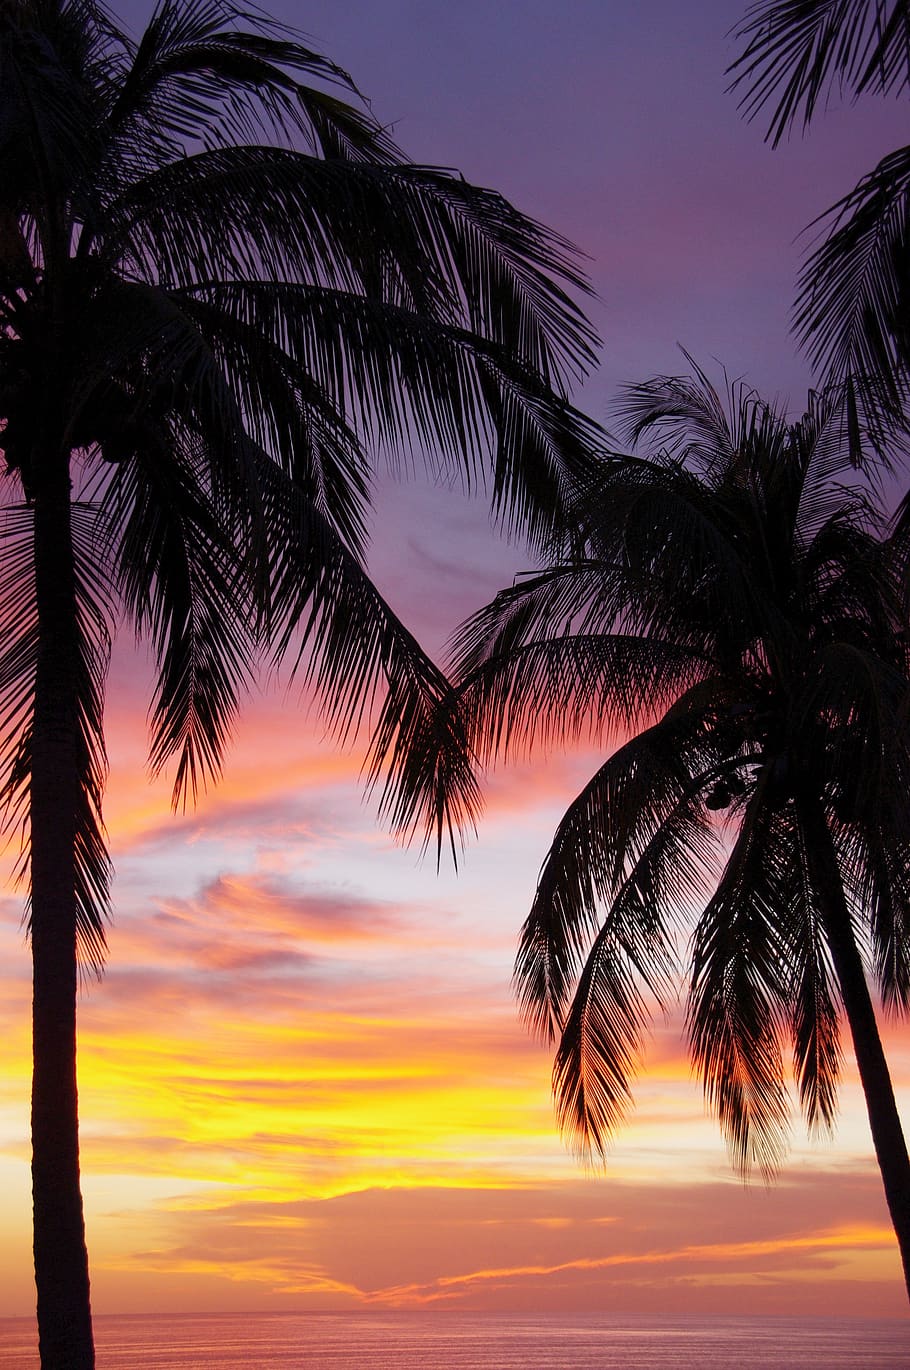 puerto escondido, oaxaca, mexico, sunset, palm trees, sky, tree, palm tree, beauty in nature, tropical climate